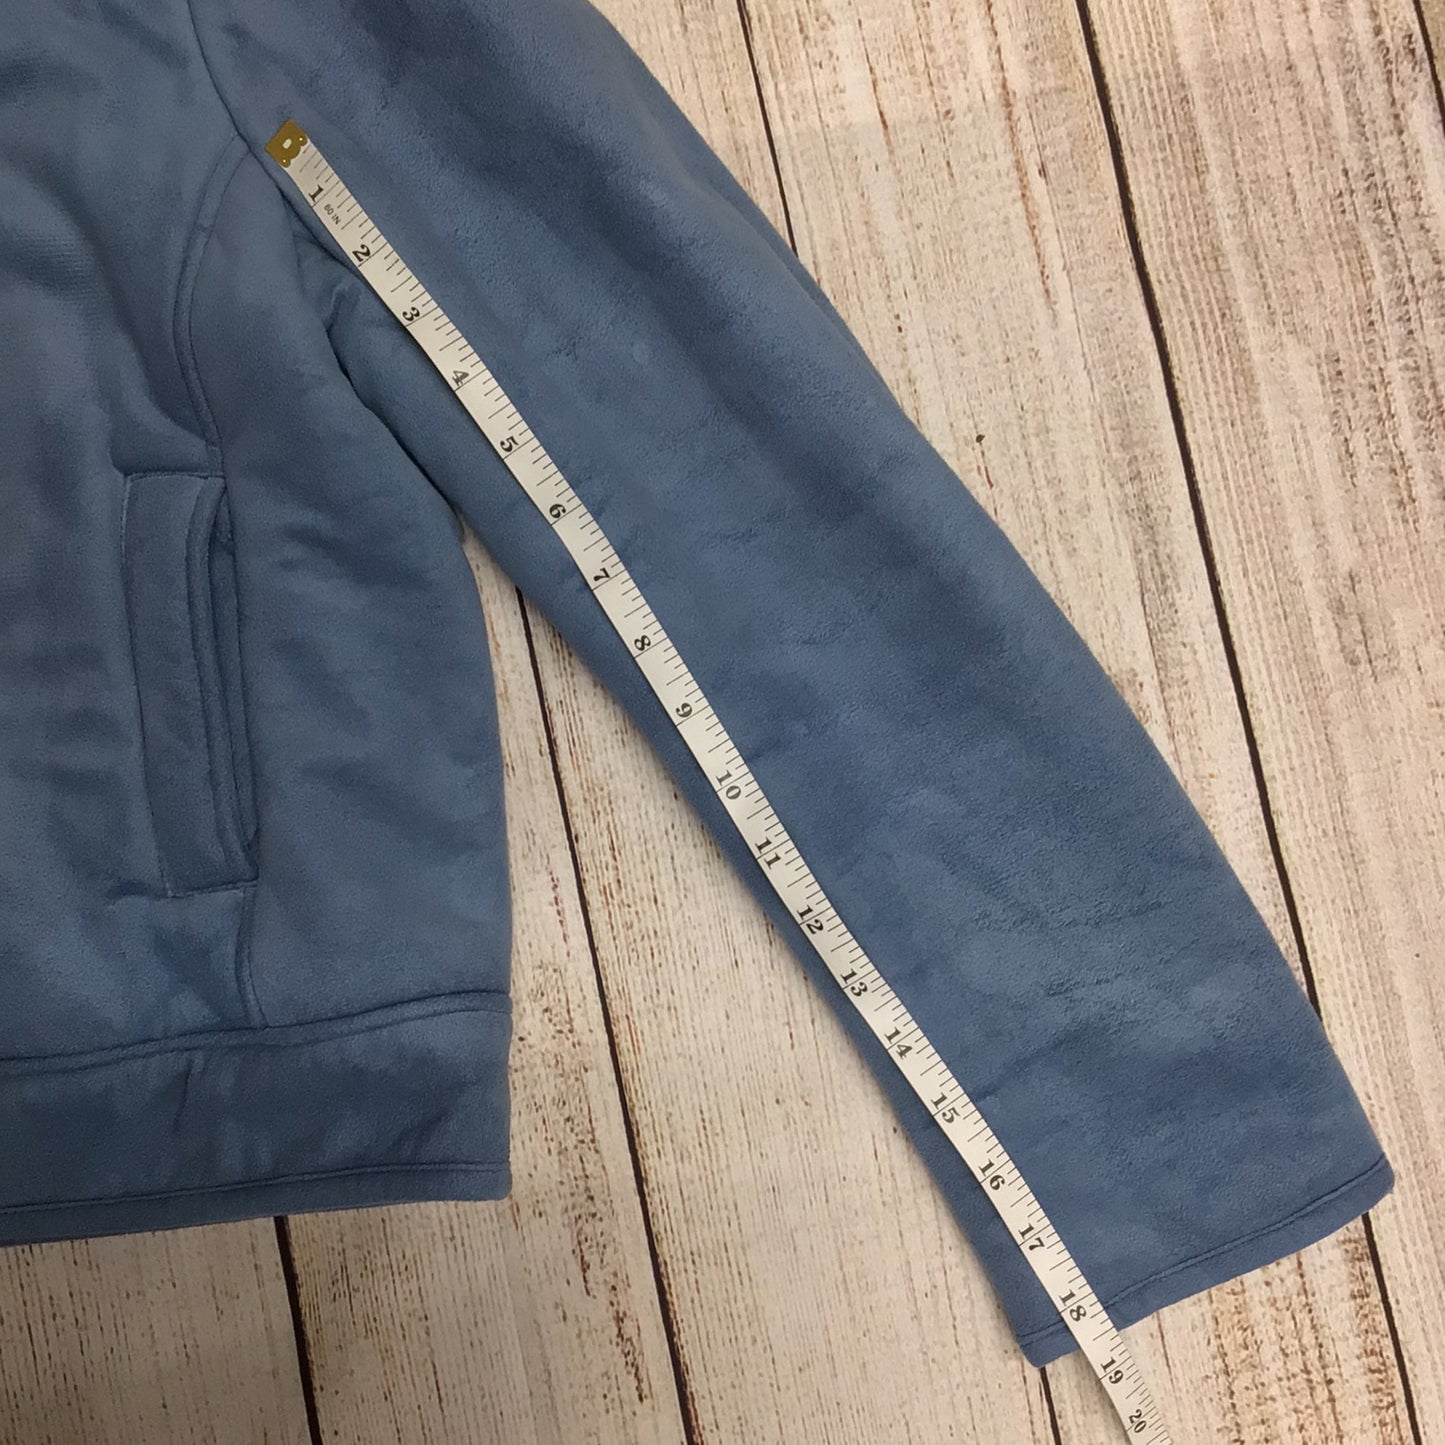 Nouveau Edition Light Blue Hooded Jumper w/Teddy Bear Lining Size 16 (on label)